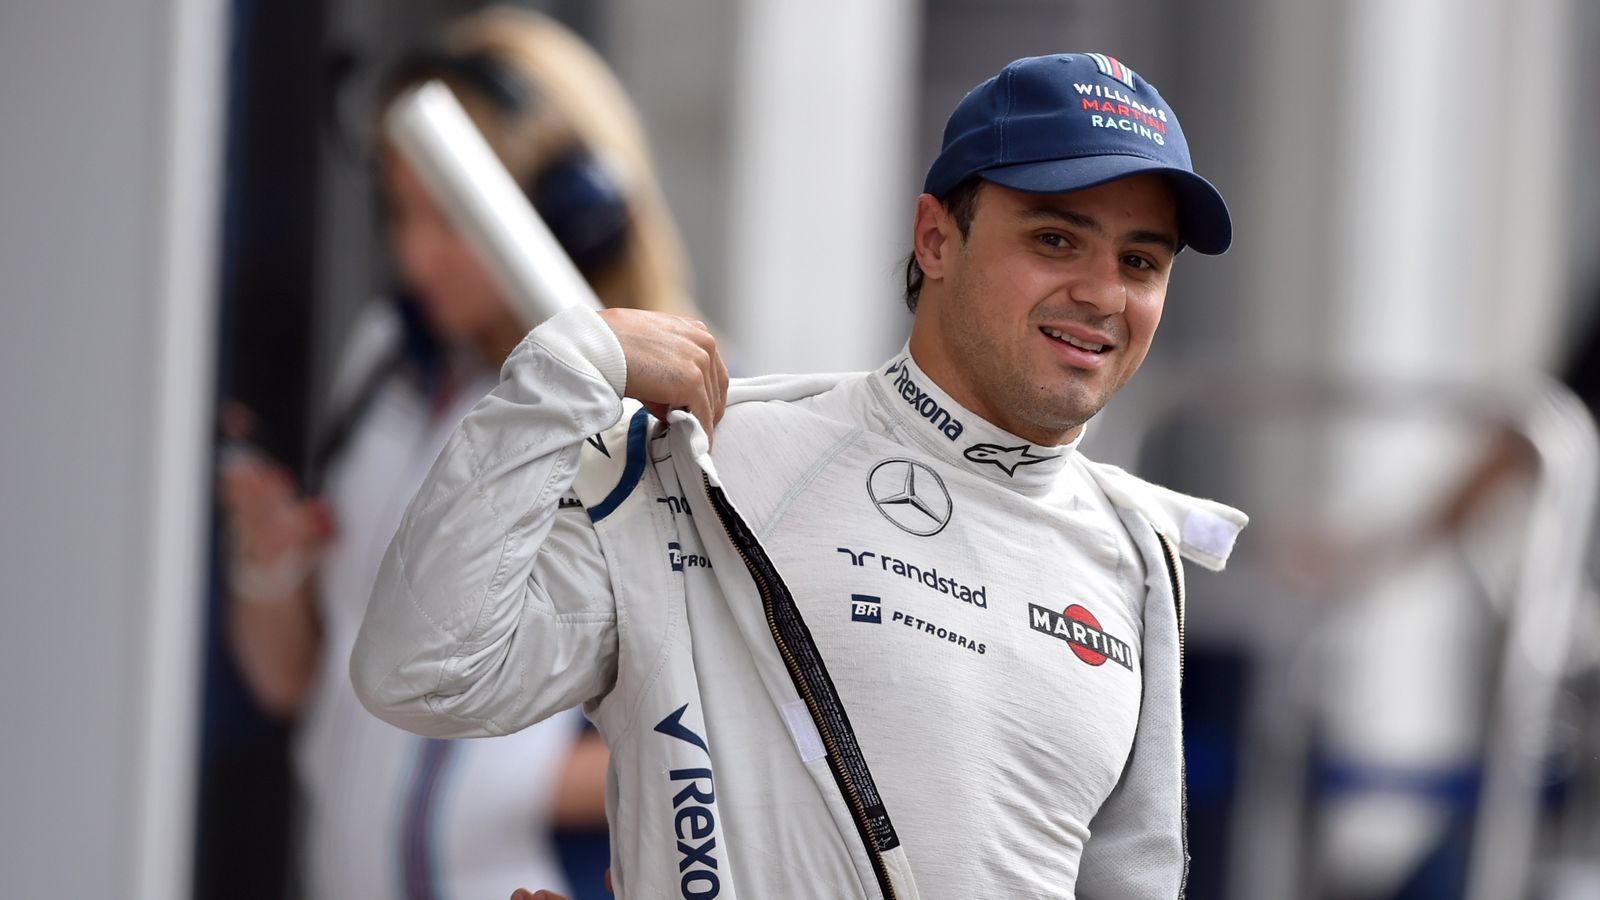 Got a question you want to ask Felipe Massa? | F1 News